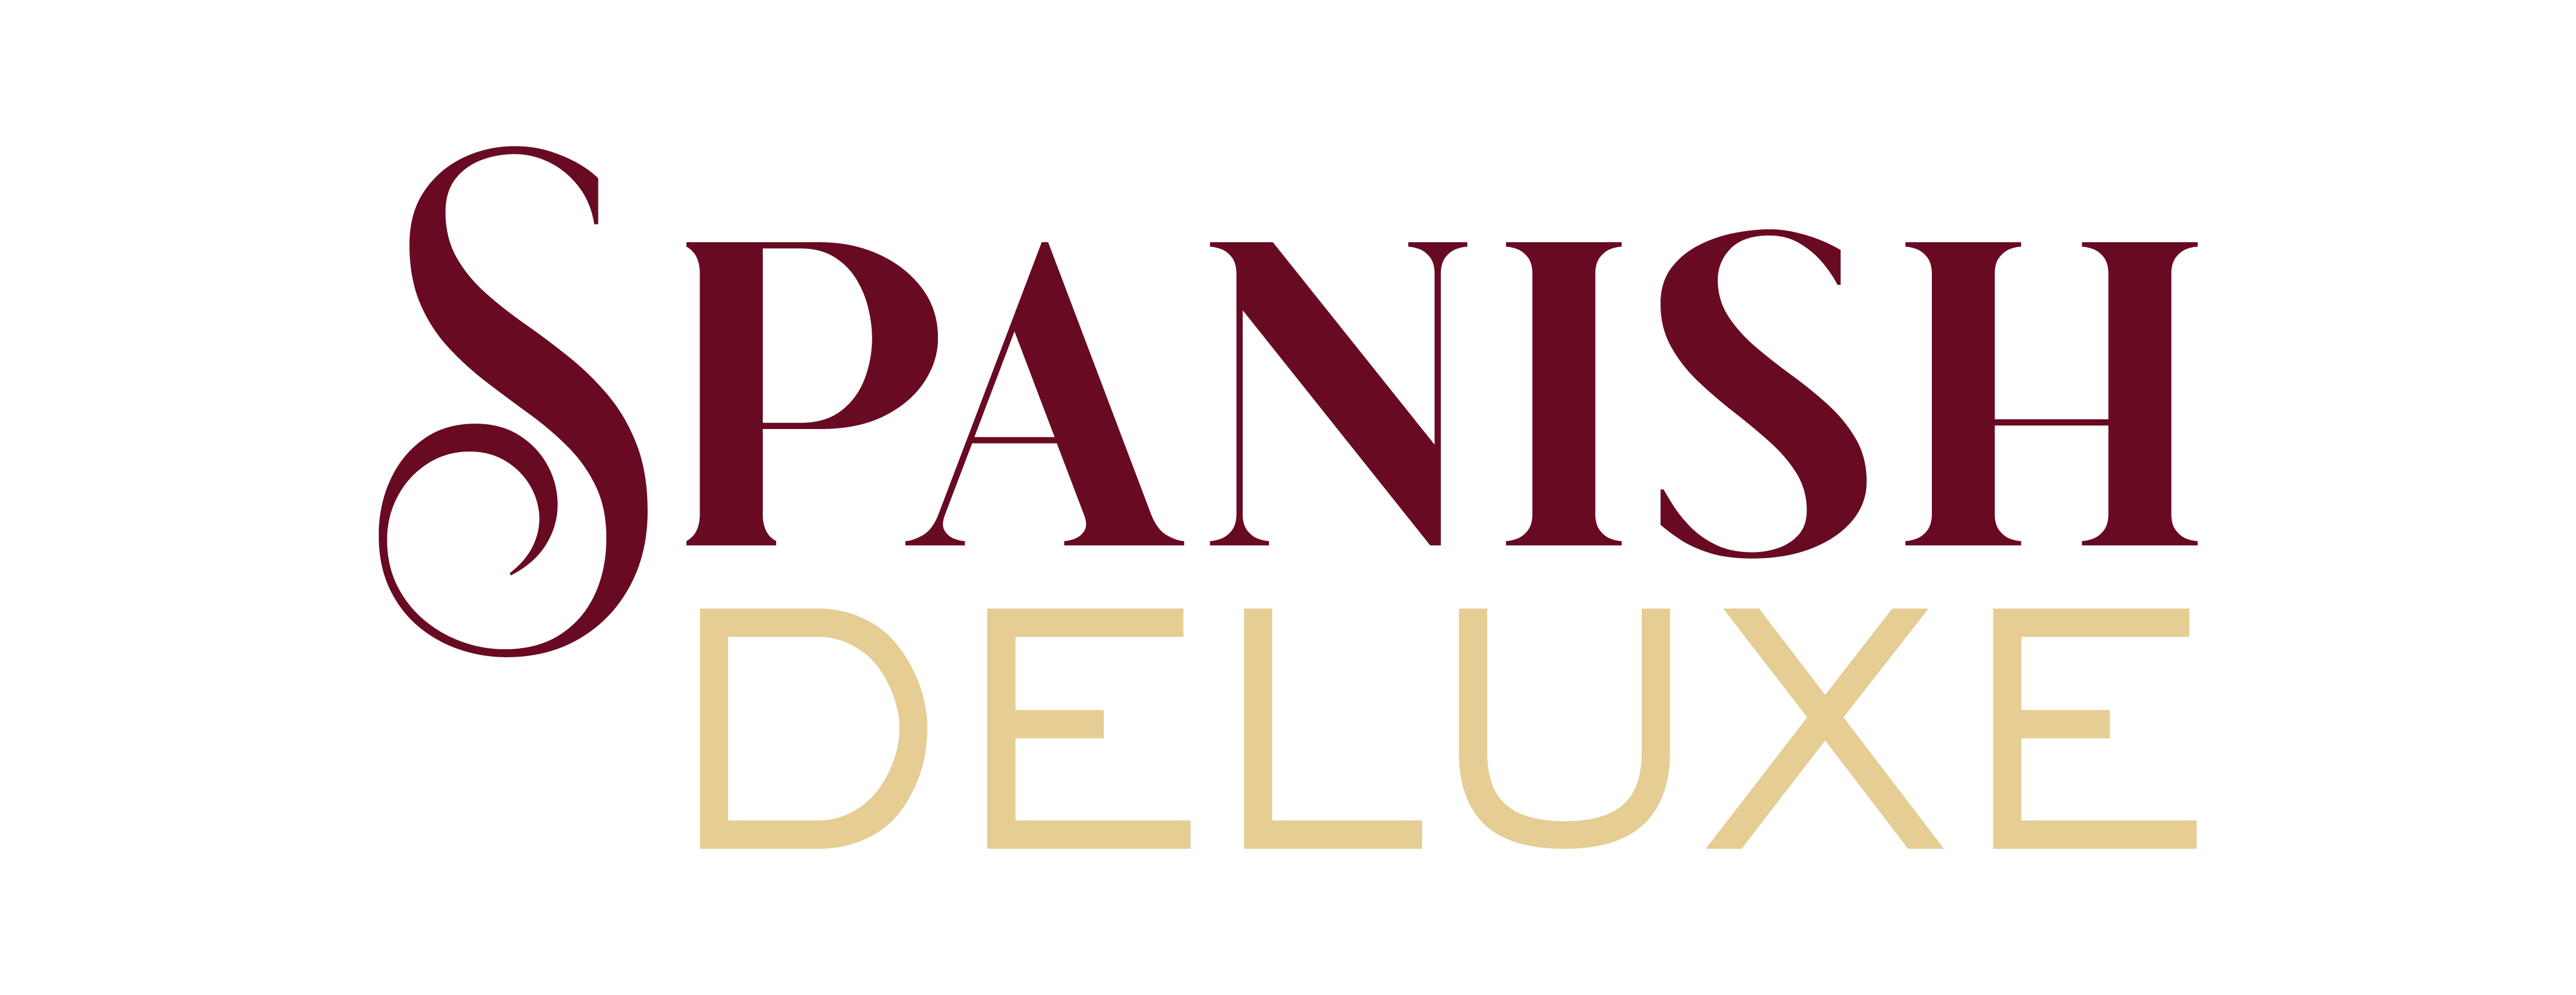 Spanish Deluxe